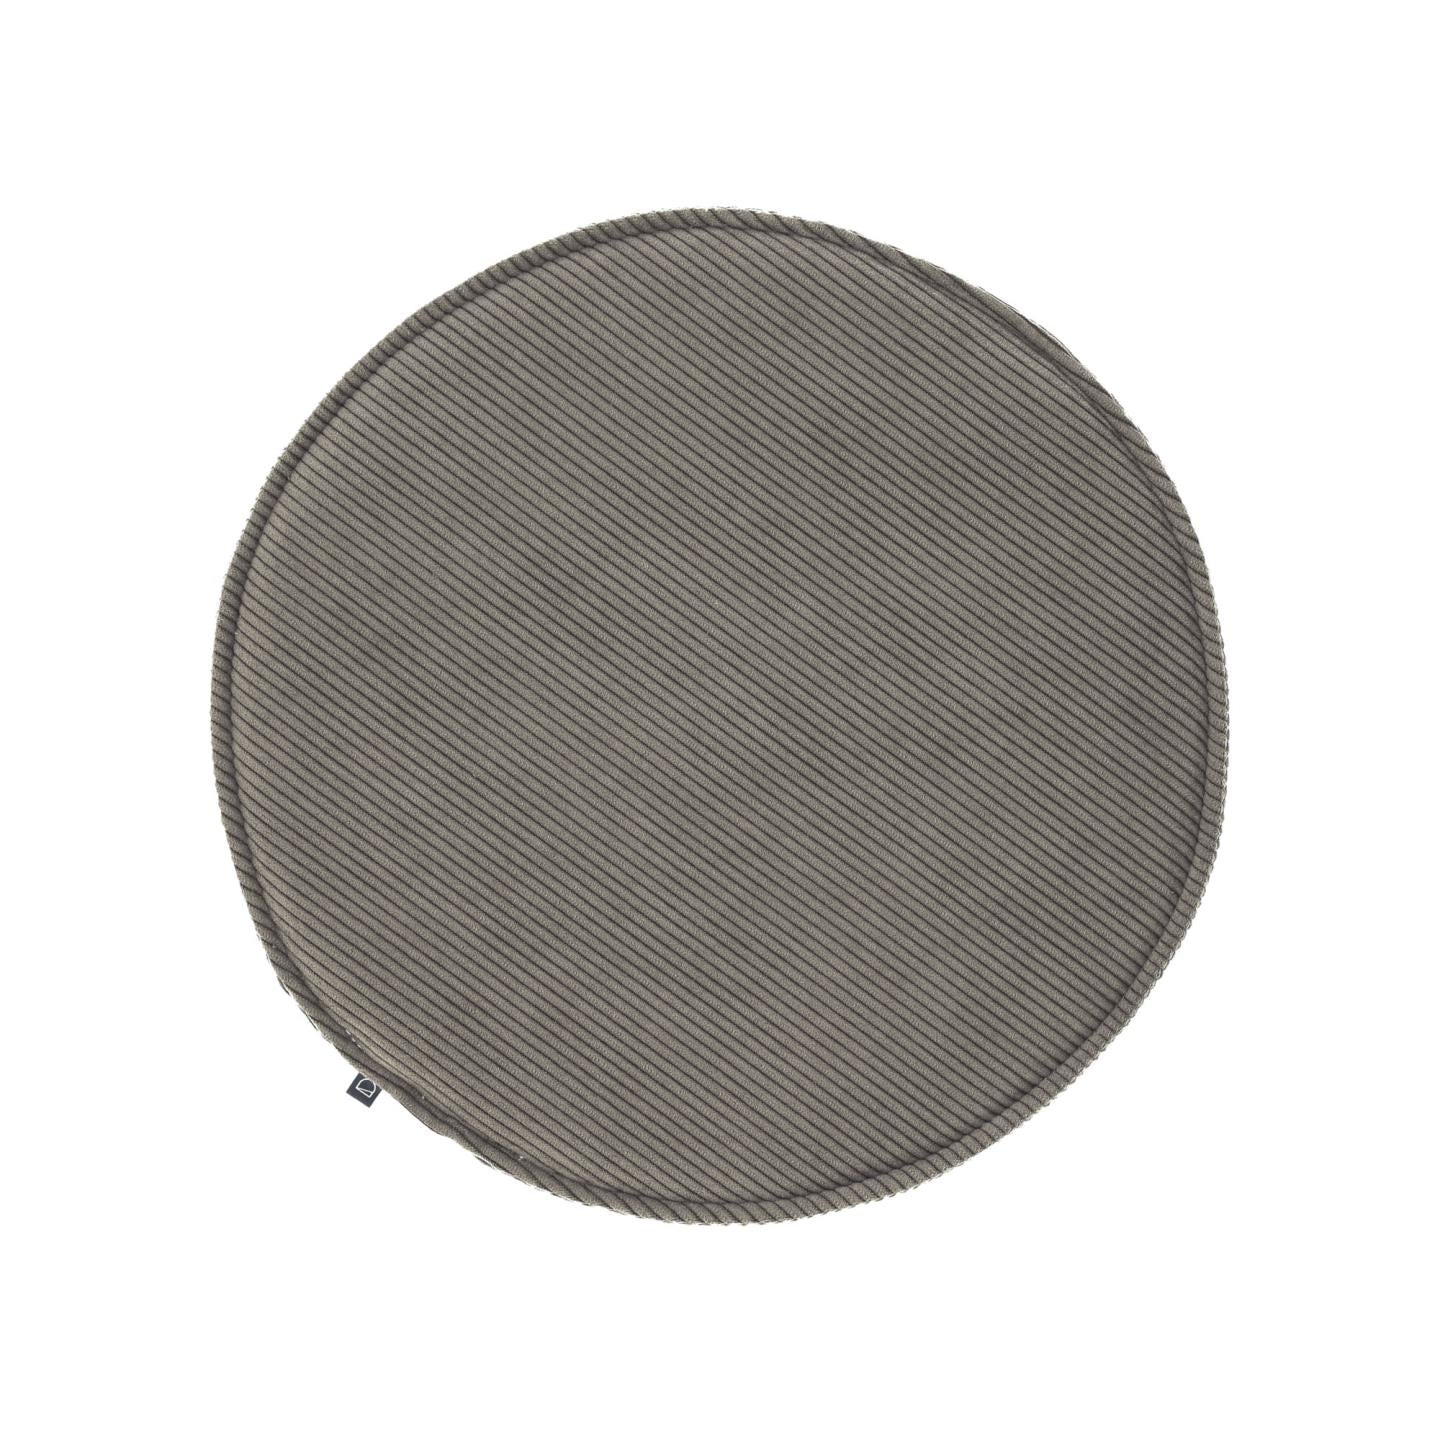 Sora round corduroy chair cushion in grey, 35 cm